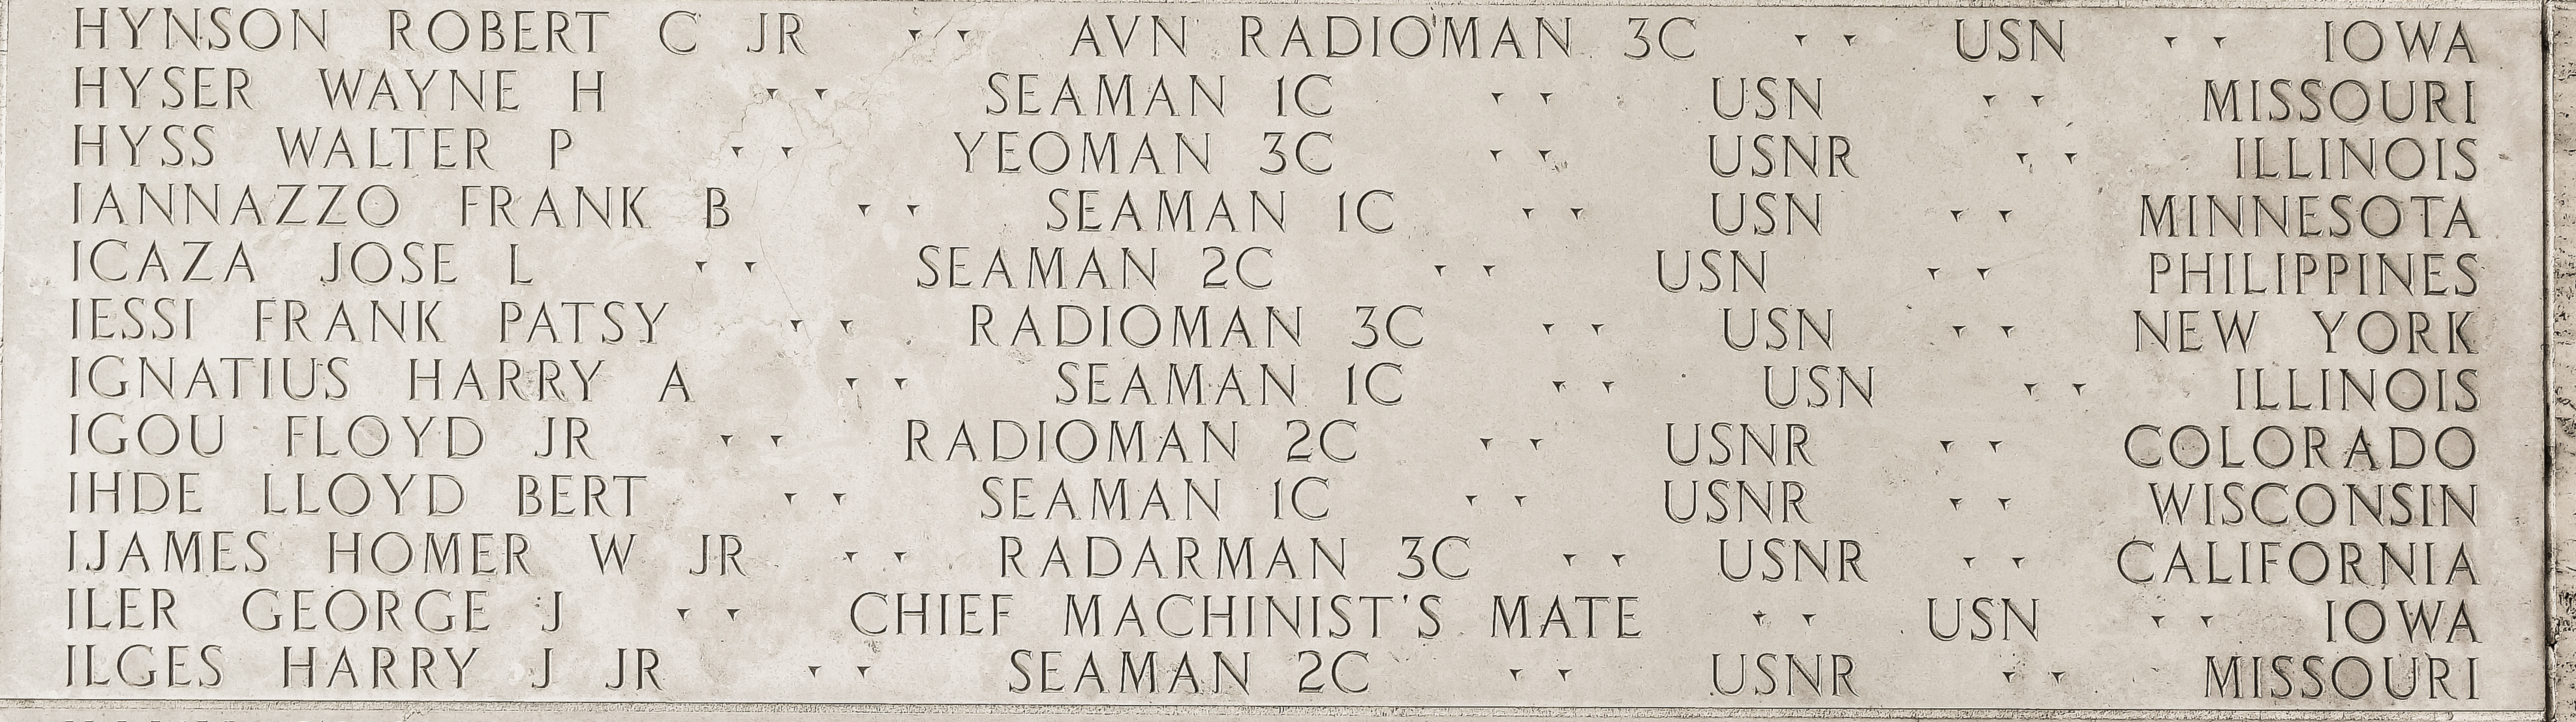 Homer W. Ijames, Radarman Third Class